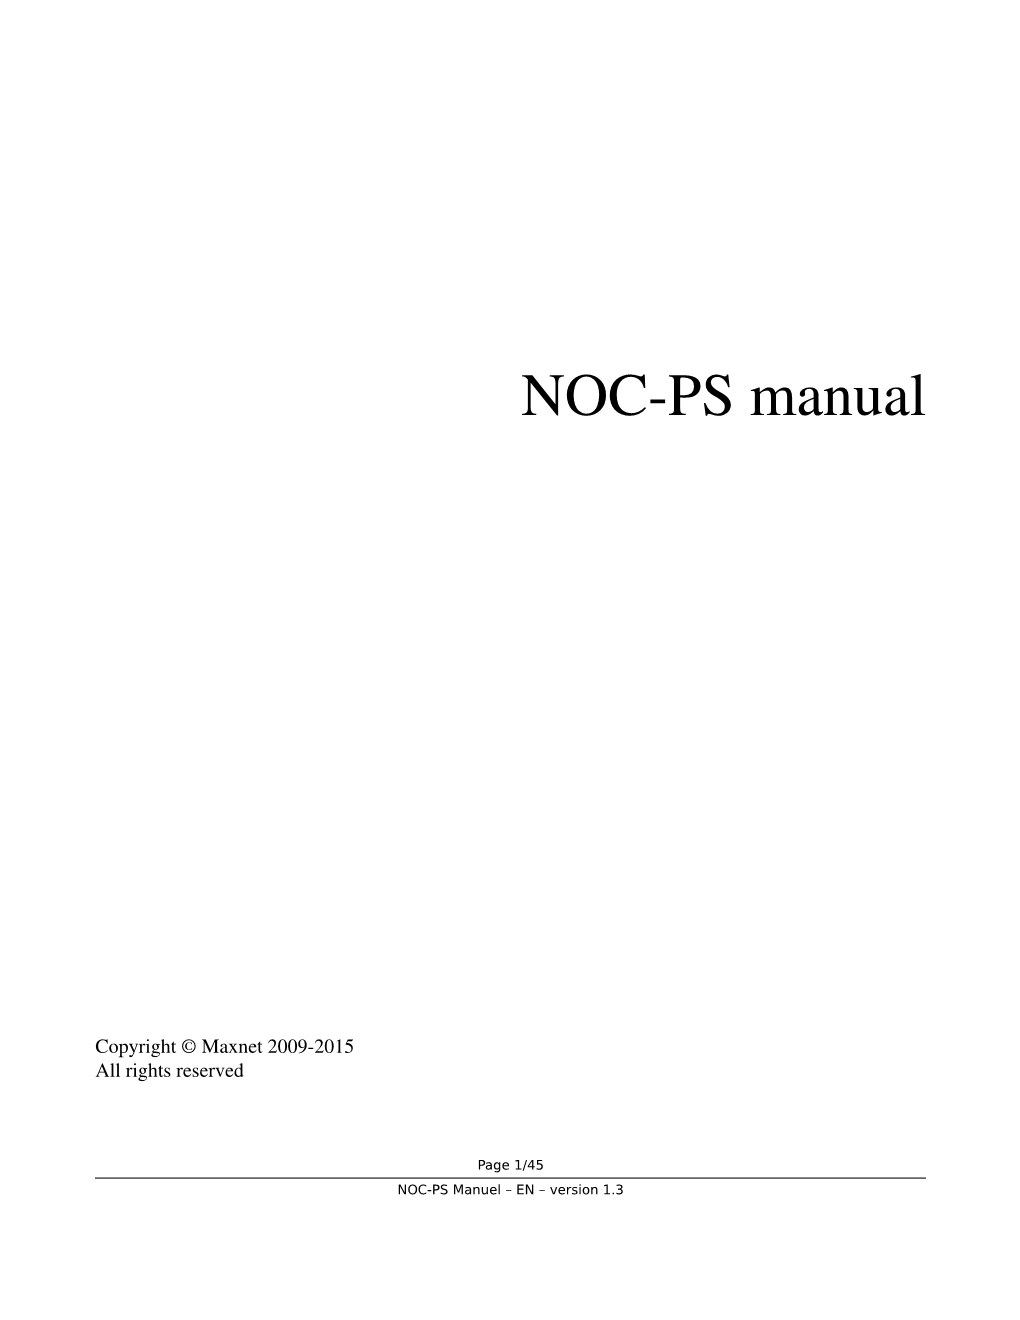 NOCPS Manual